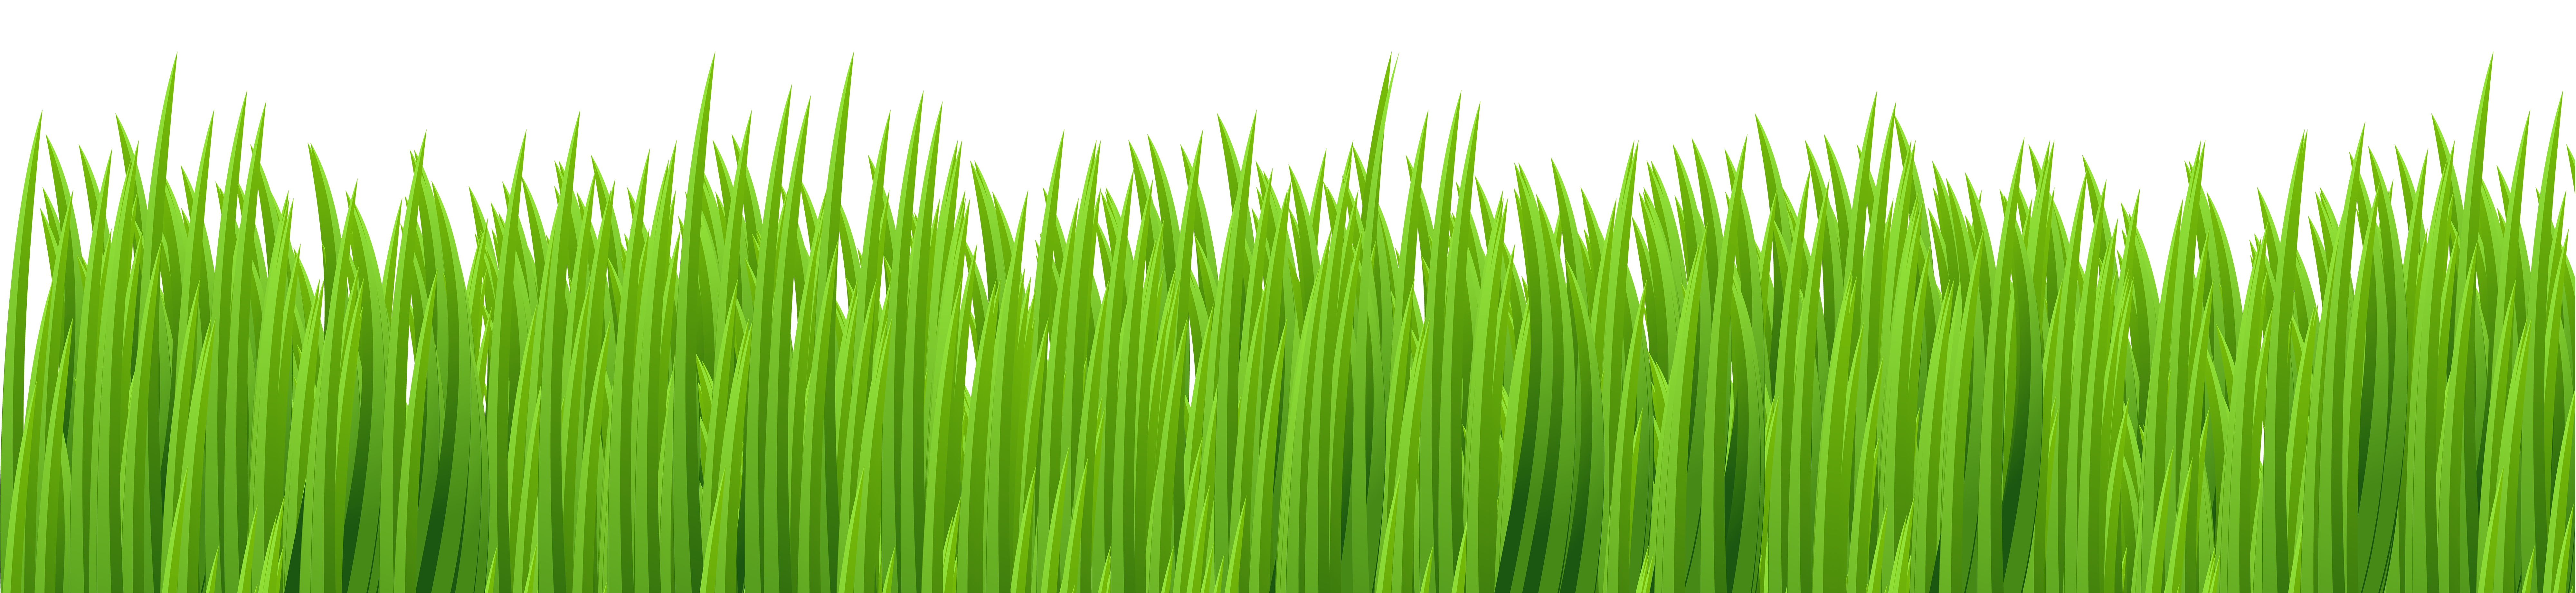 Spring Grass Ground Transparent Clip Art Image | Gallery ...